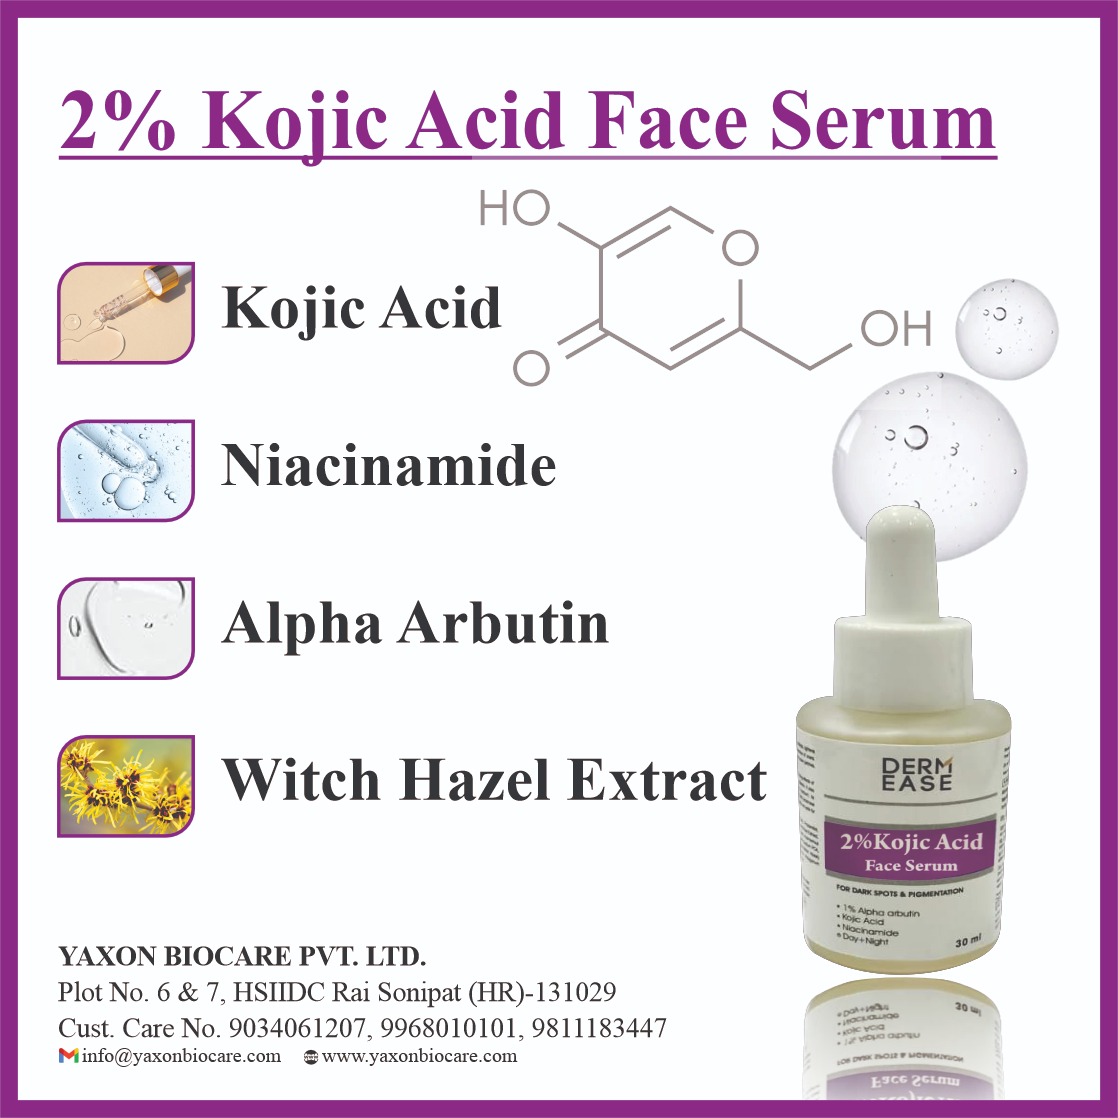 DERM EASE Kojic Acid Face Serum 